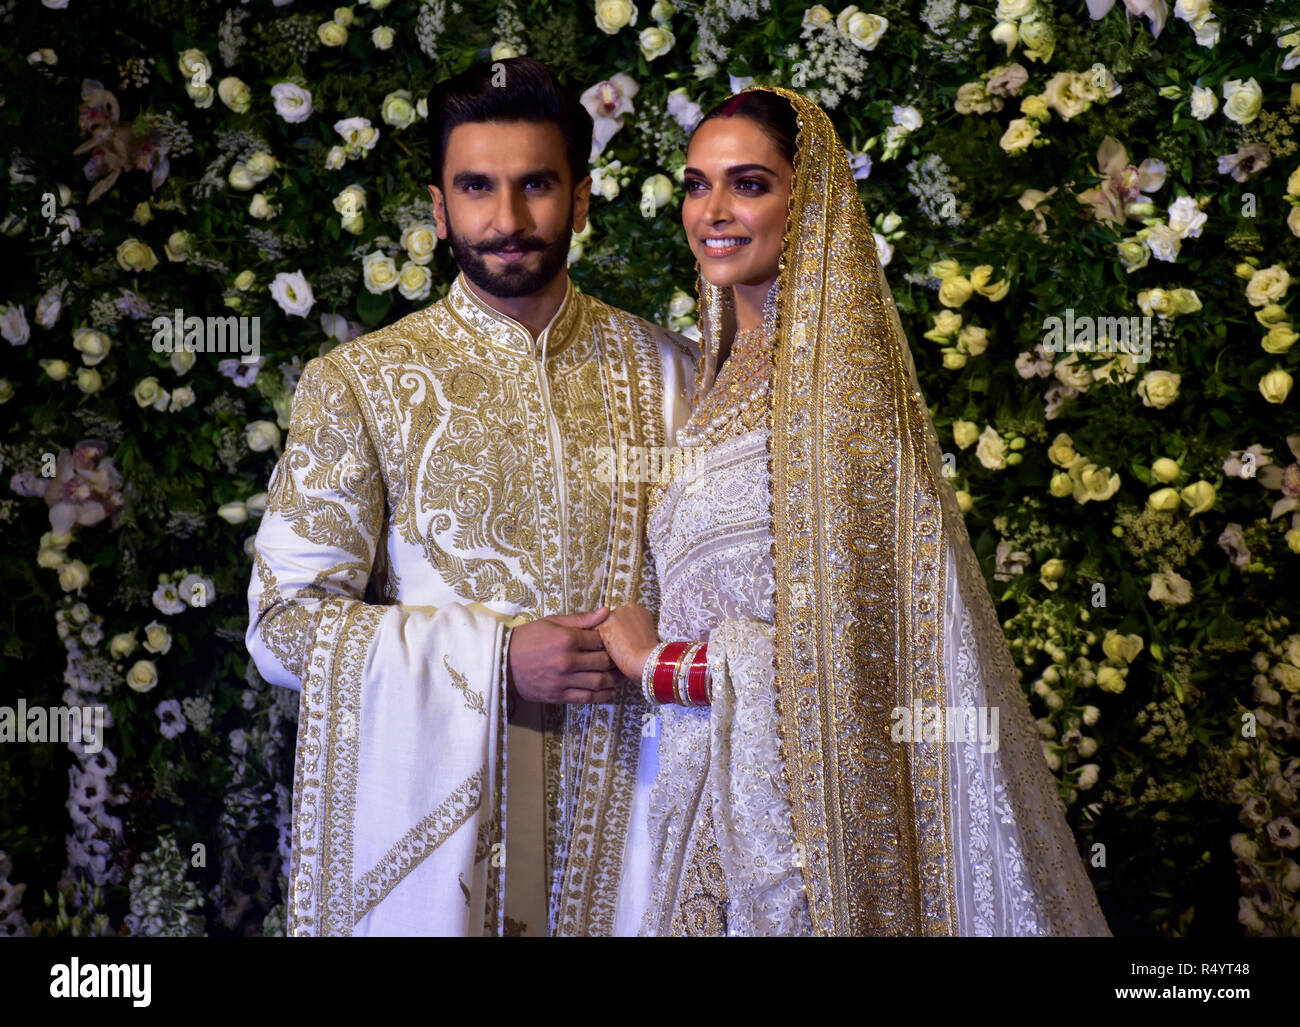 10 Best Ranveer Singh Wedding Dresses For Ultimate Inspo